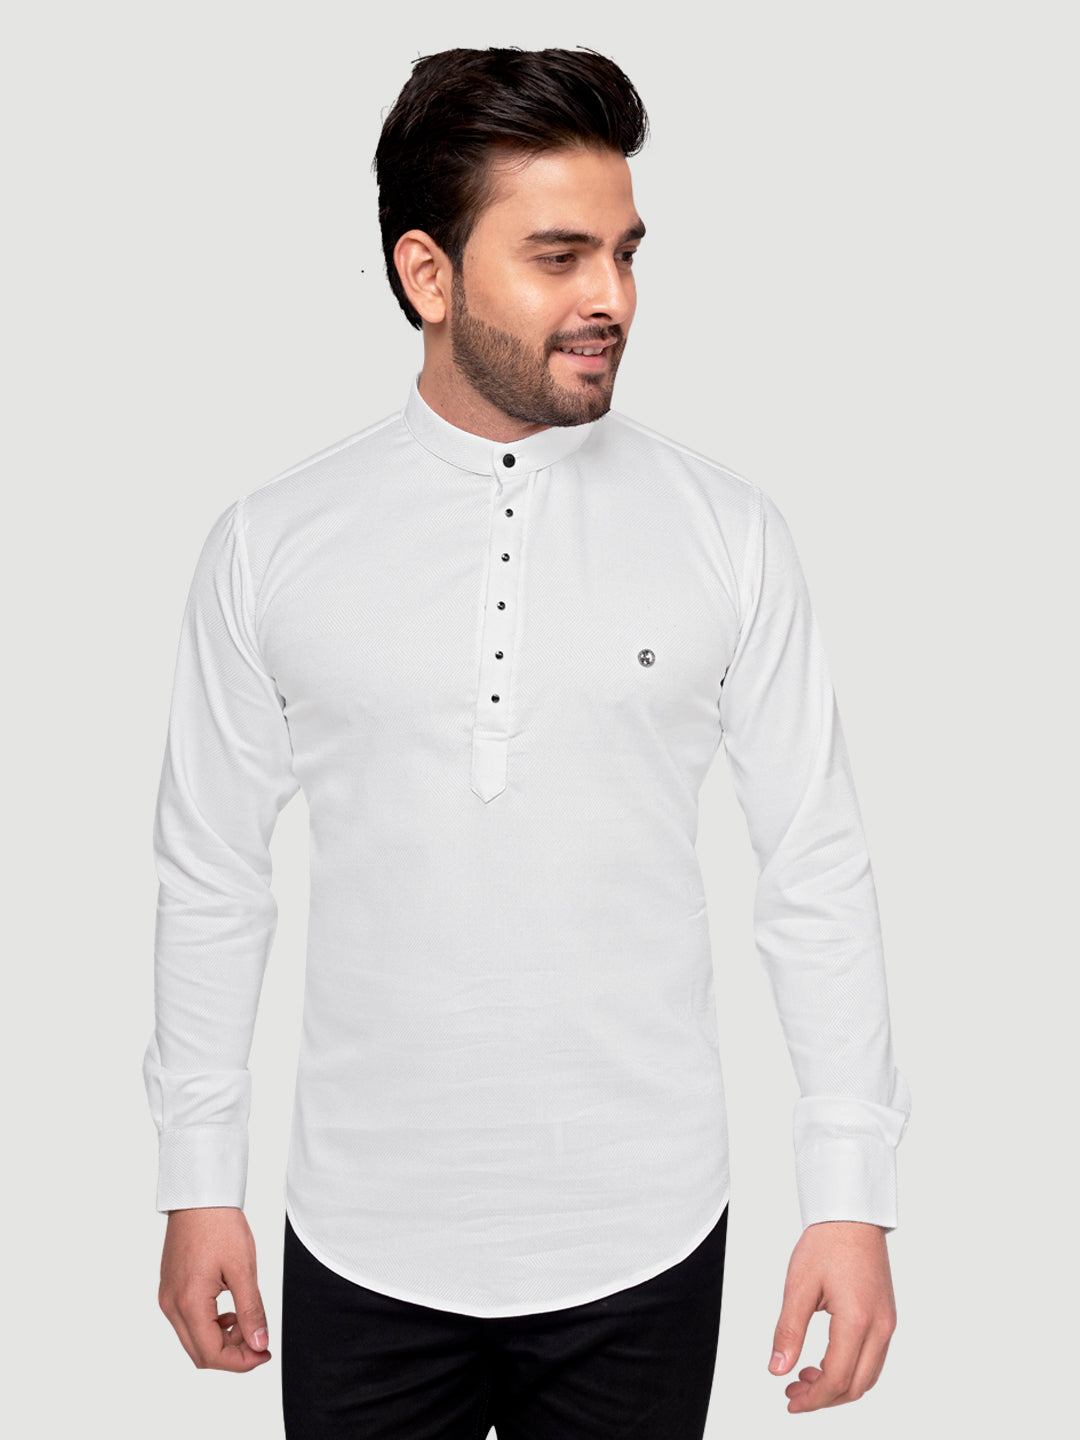 Black and White Shirts Men's Designer Short Kurta with Metal Buttons White